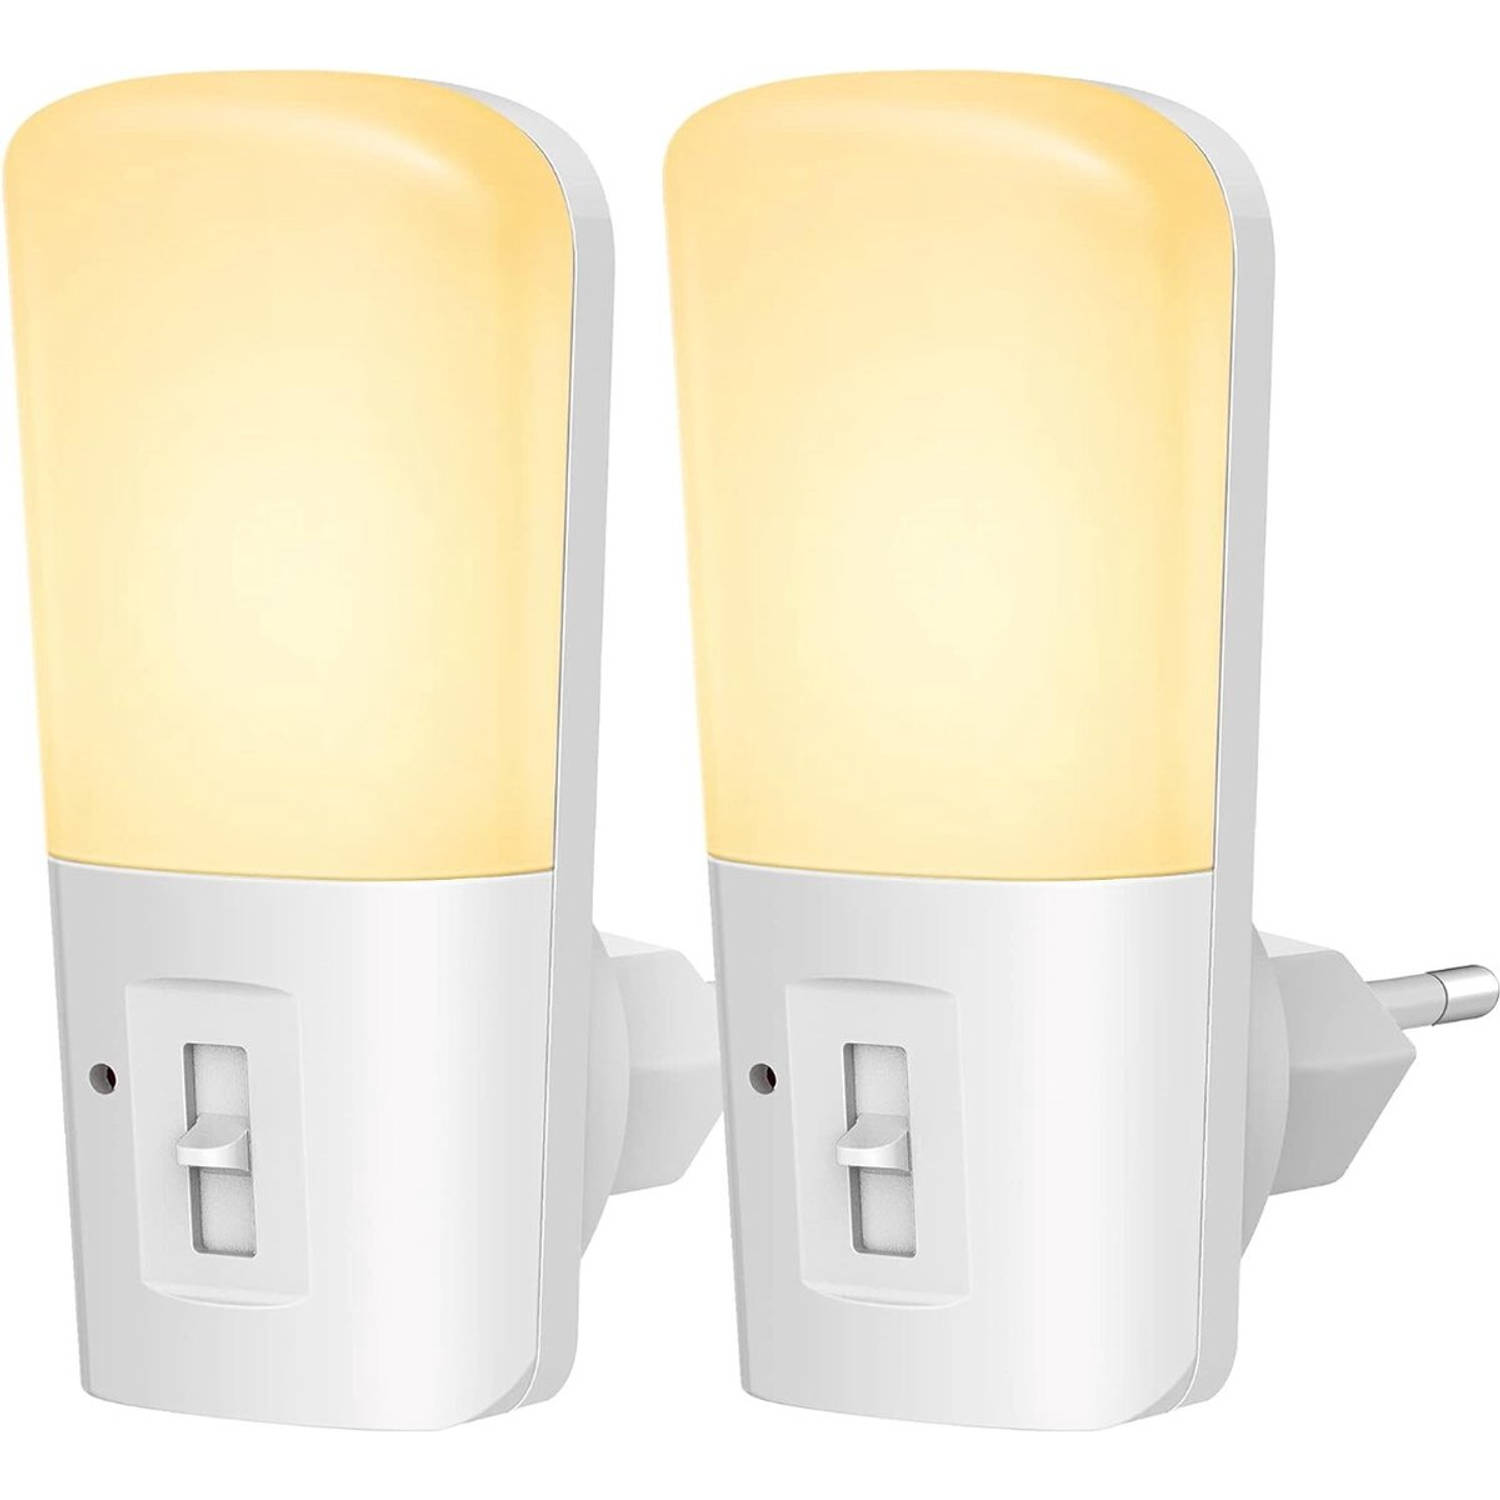 Qumax LED Nachtlampje Stopcontact 2 stuks Dimbare Nachtlampjes met Sensor Nachtlampje Babykamer Nach